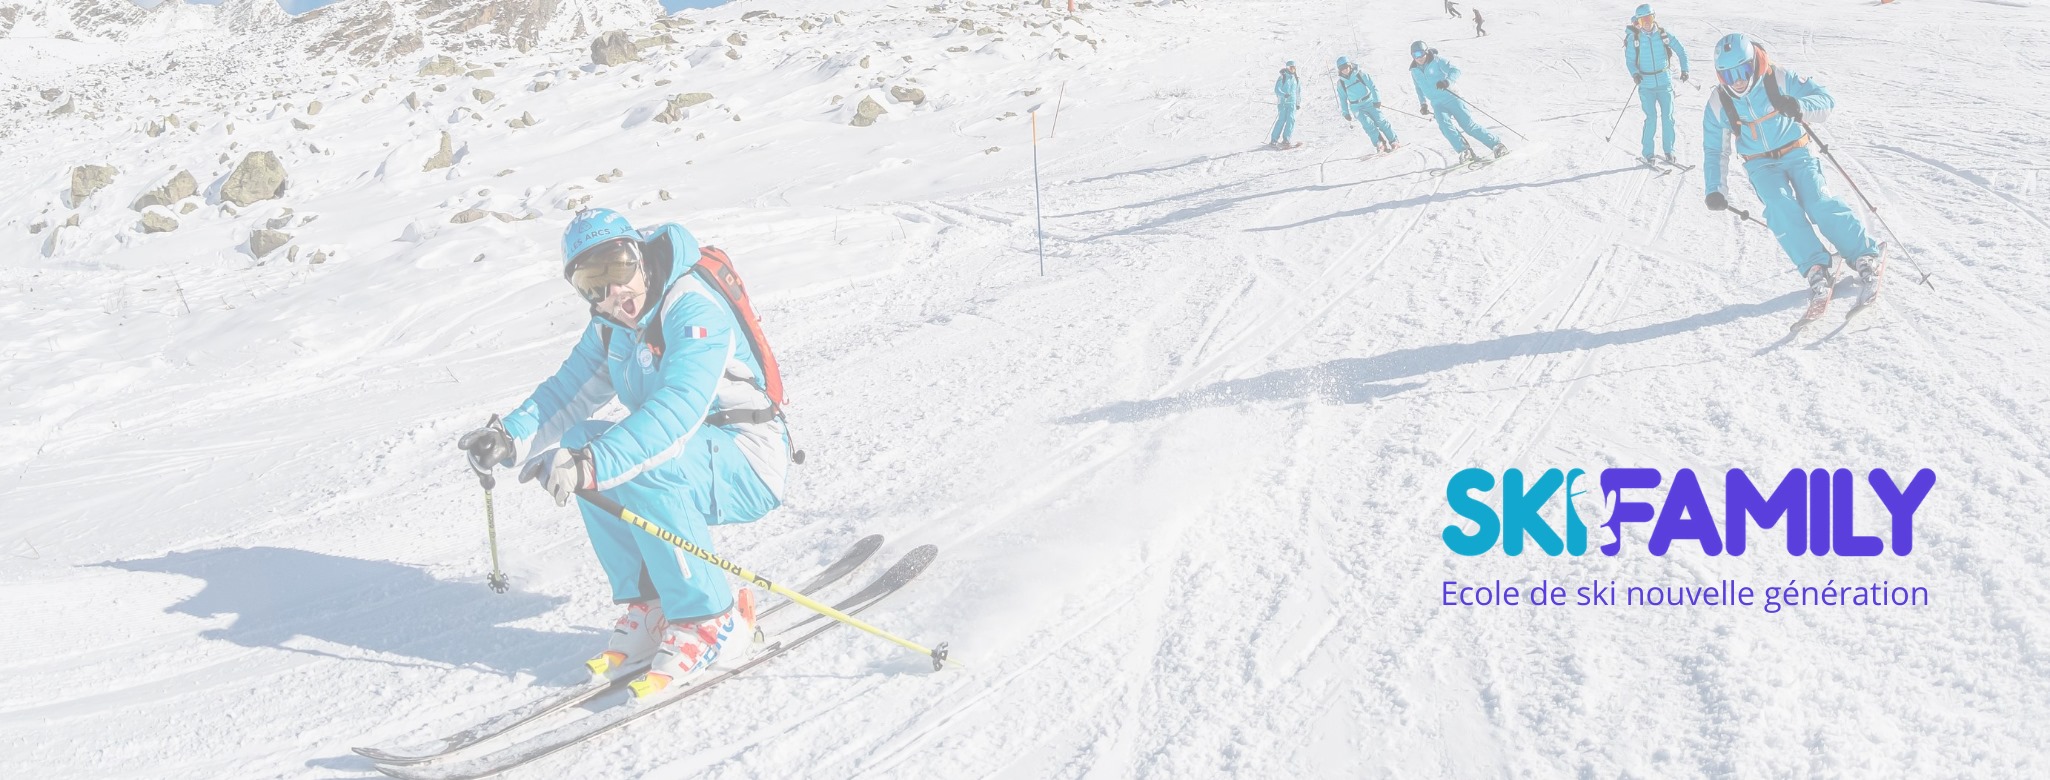 Image Ski family - Chamonix